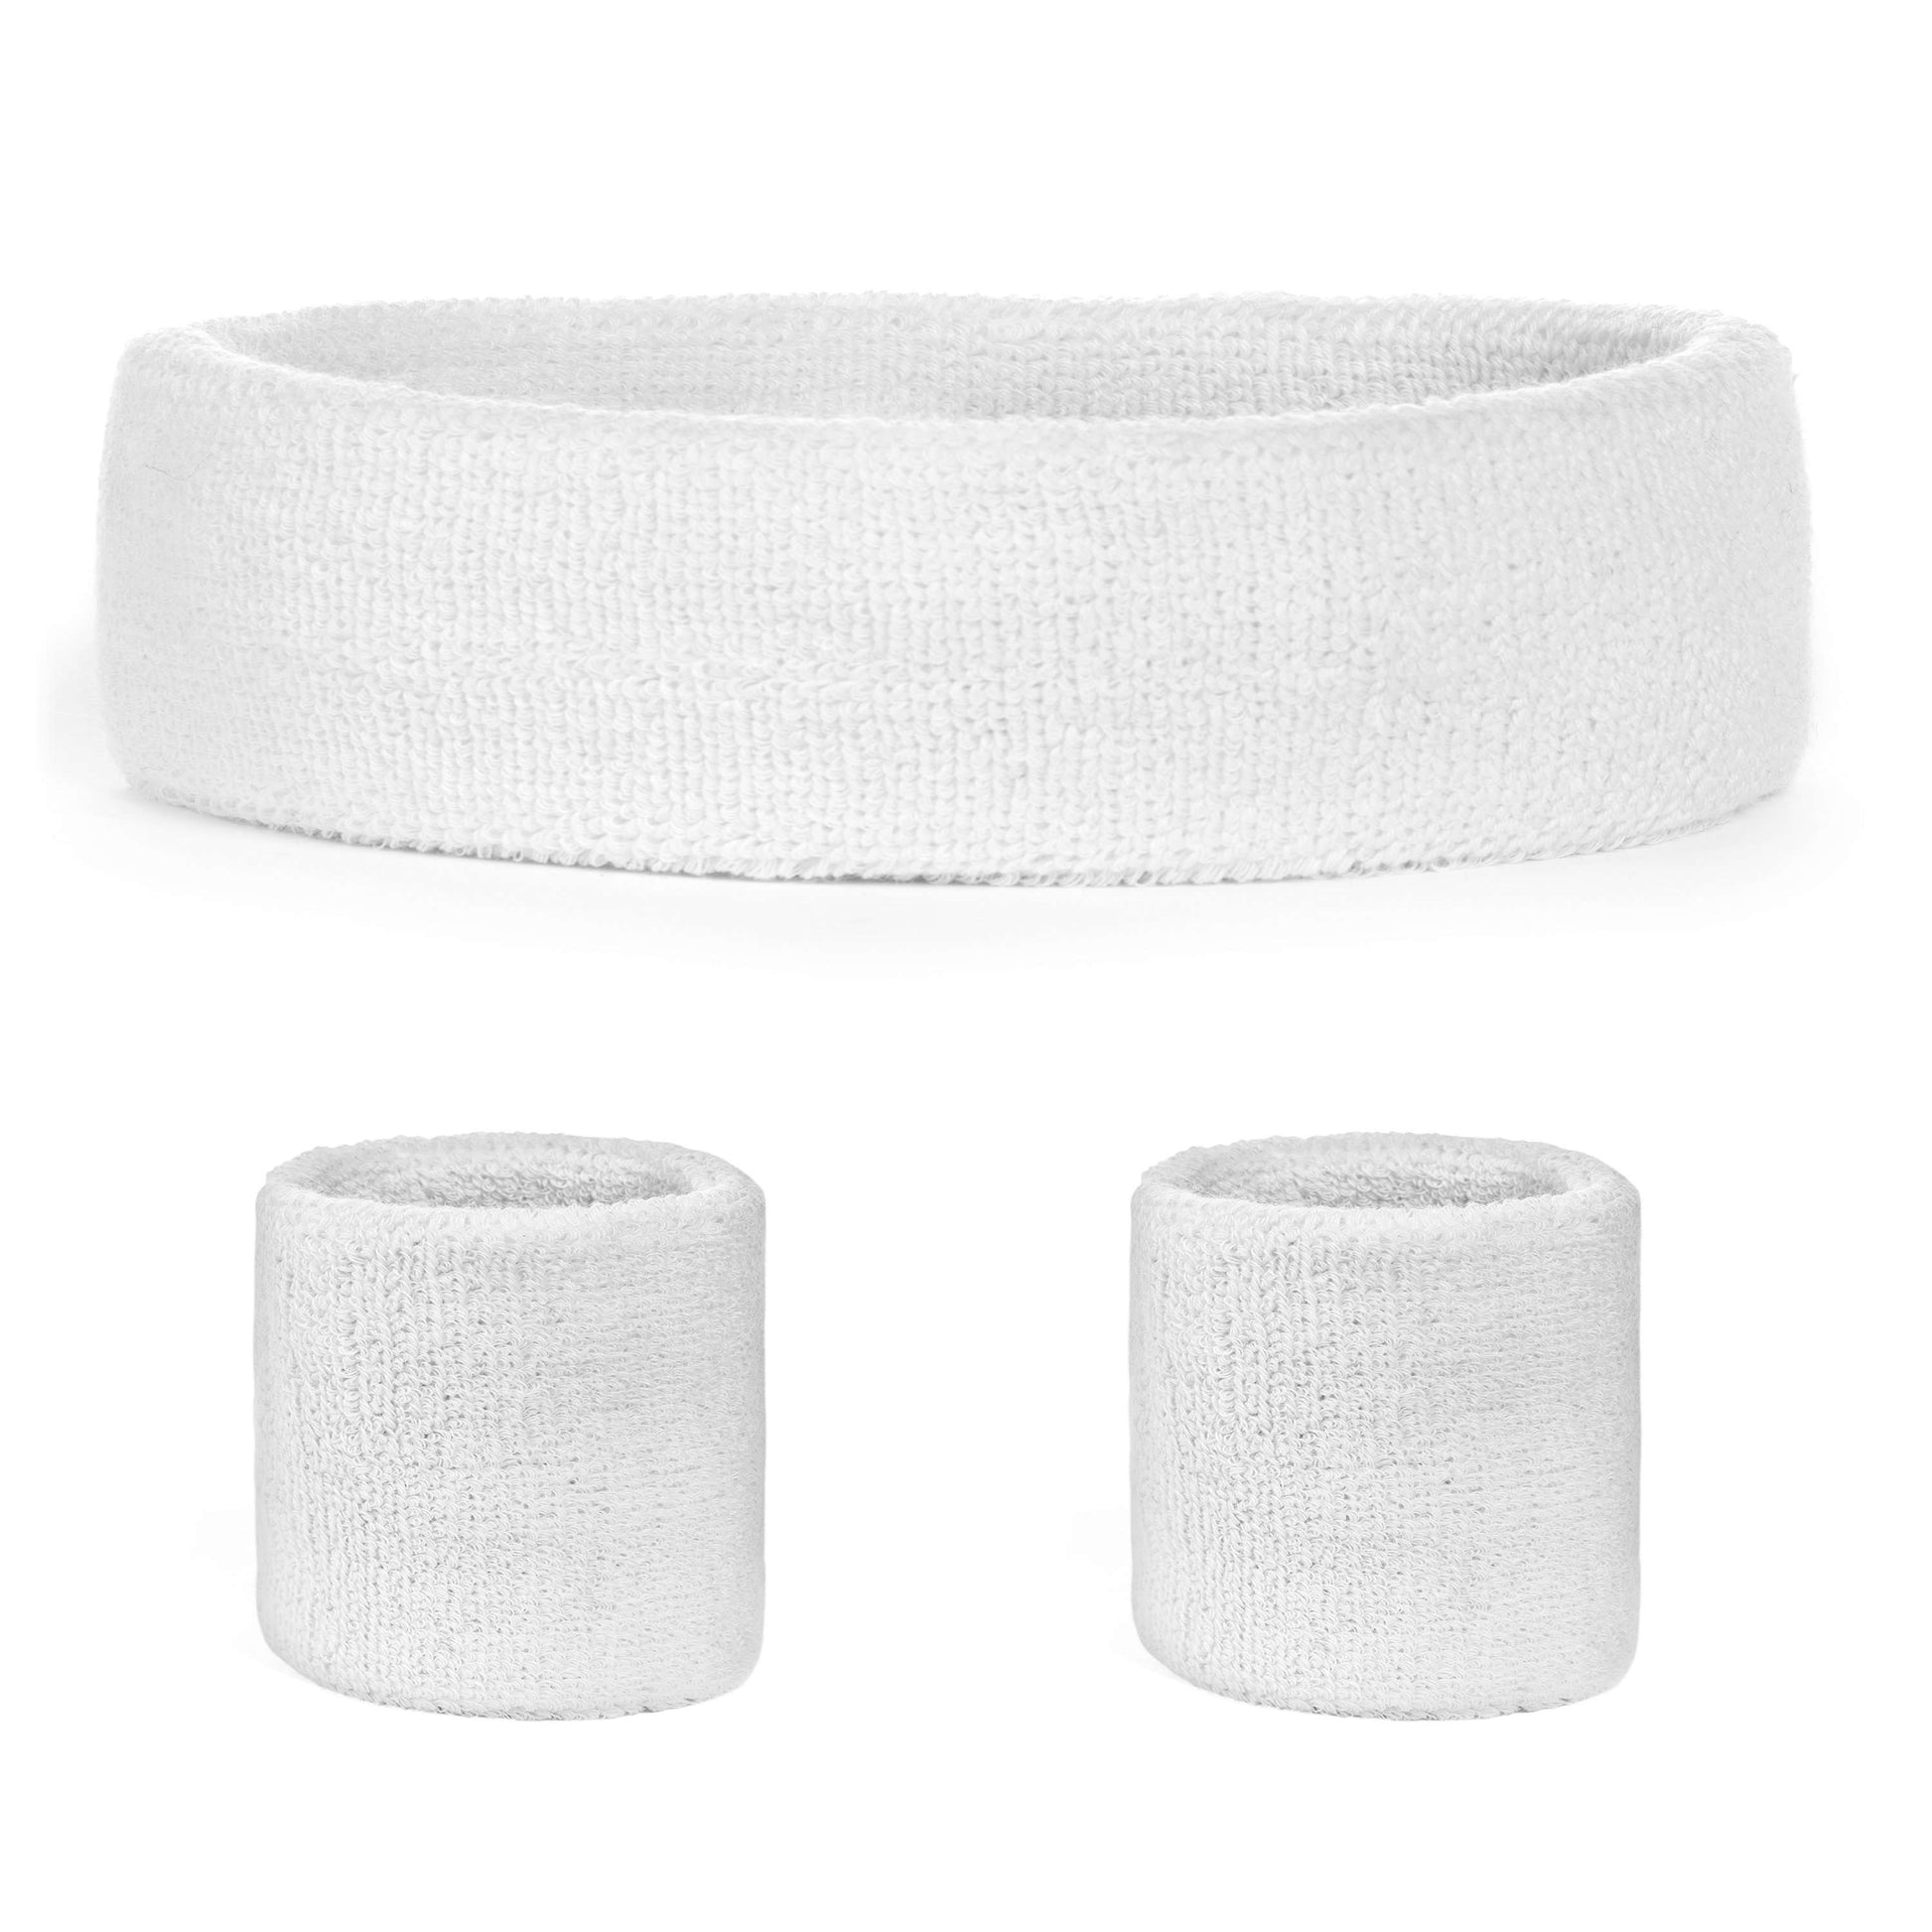 Suddora Sweatband Set (1 Headband & 2 Wristbands) - White